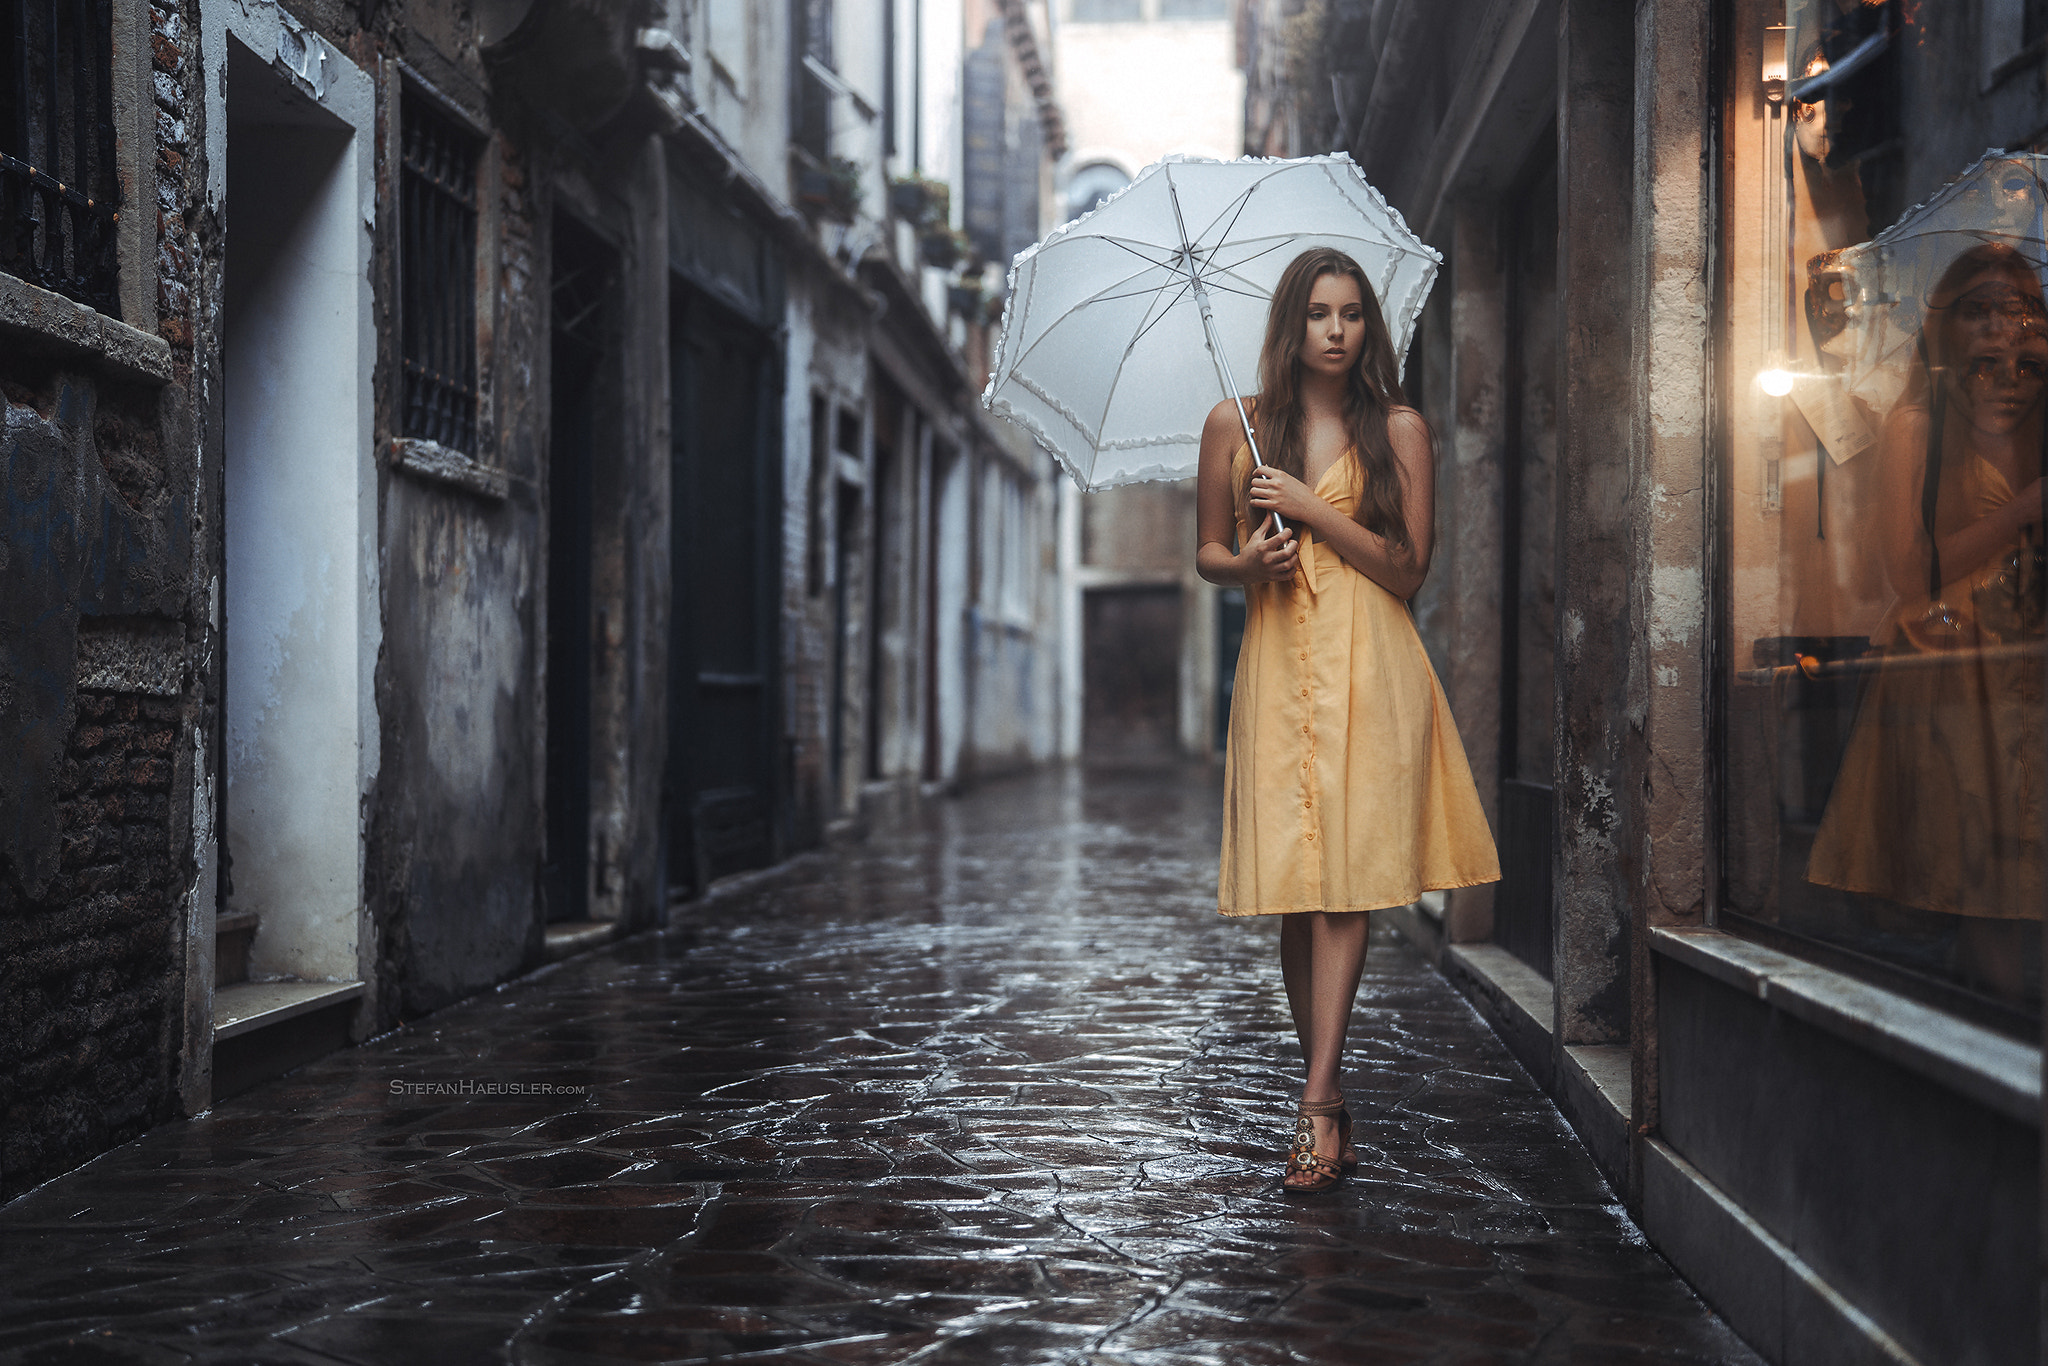 Viktoria Stephanie Stefan Hausler Women Umbrella Rain Yellow Dress Reflection Sandals Urban Women Ou 2048x1366